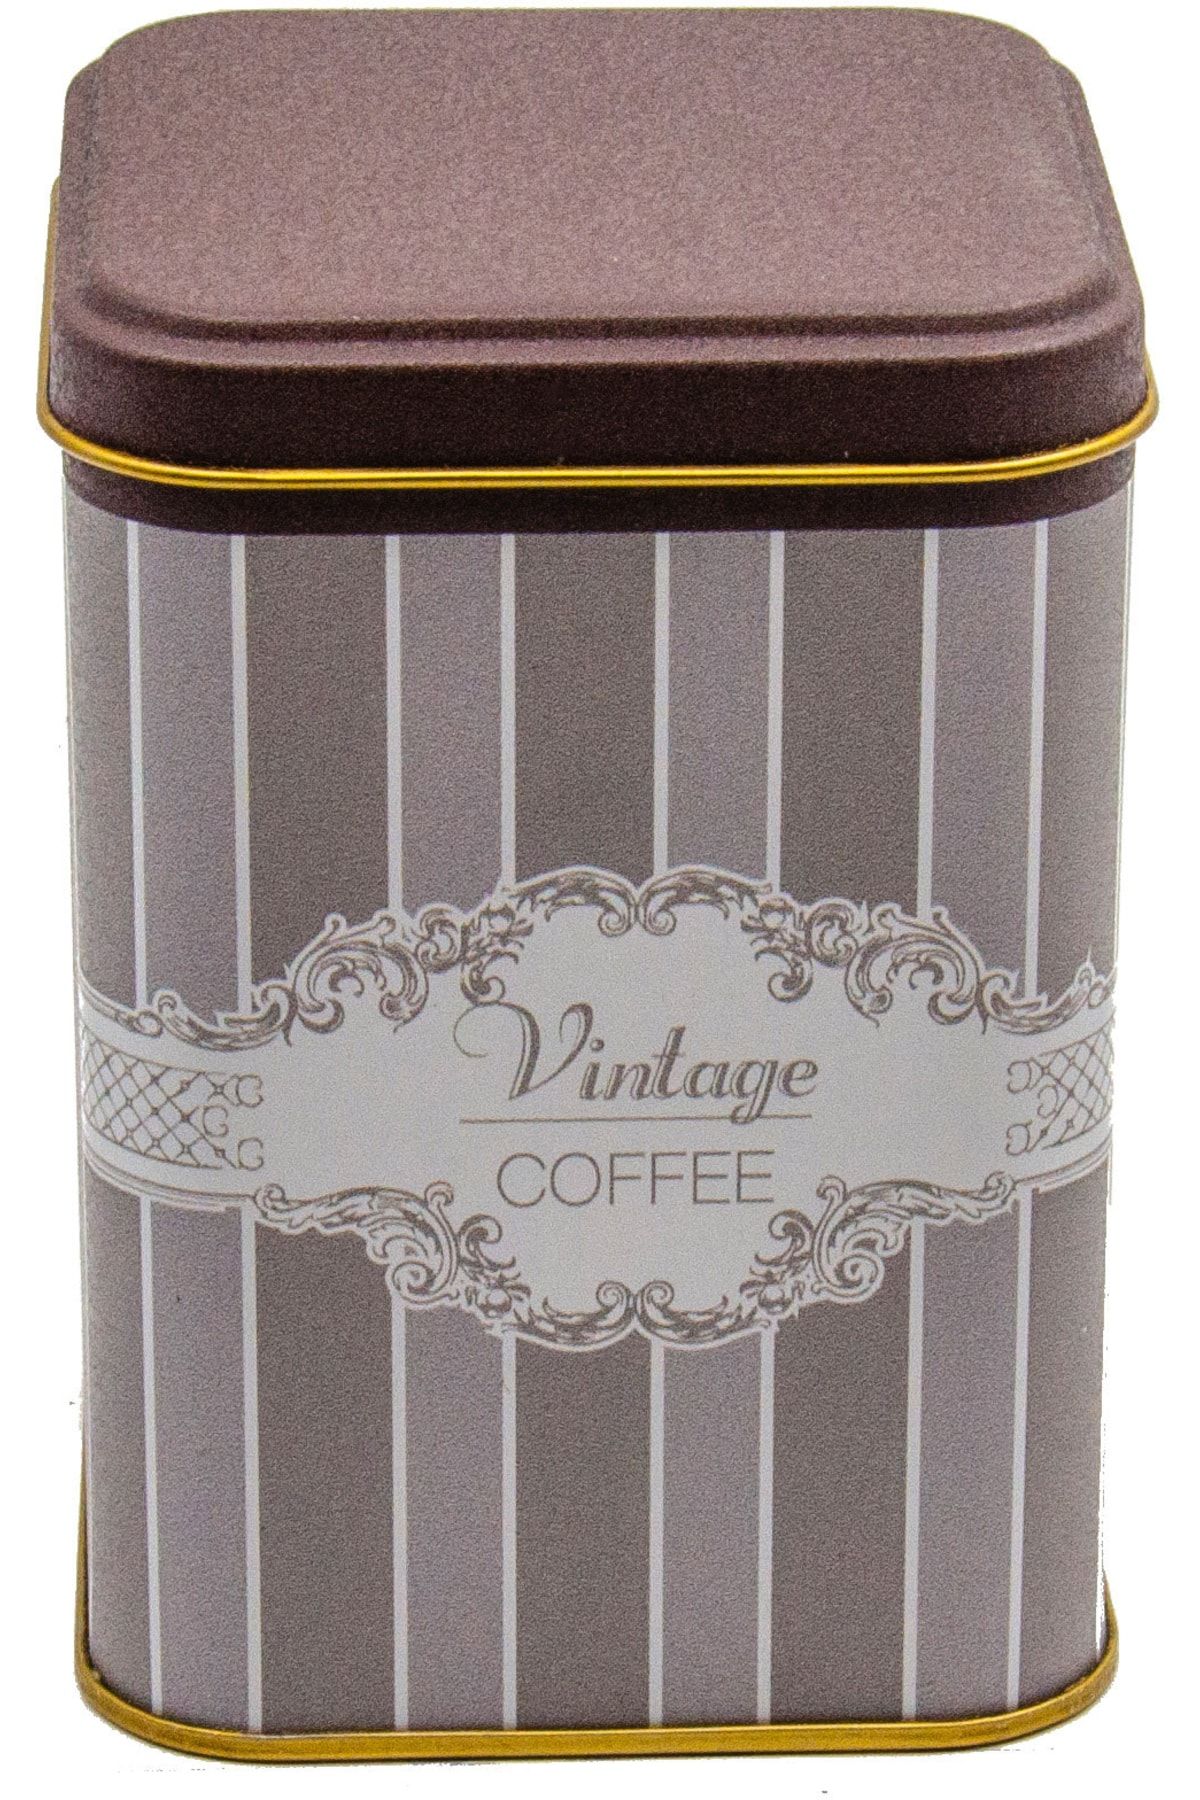 Elegance Coffee Desenli Kare Metal Kutu, 9 x 9 x 12.5 cm, 1 lt